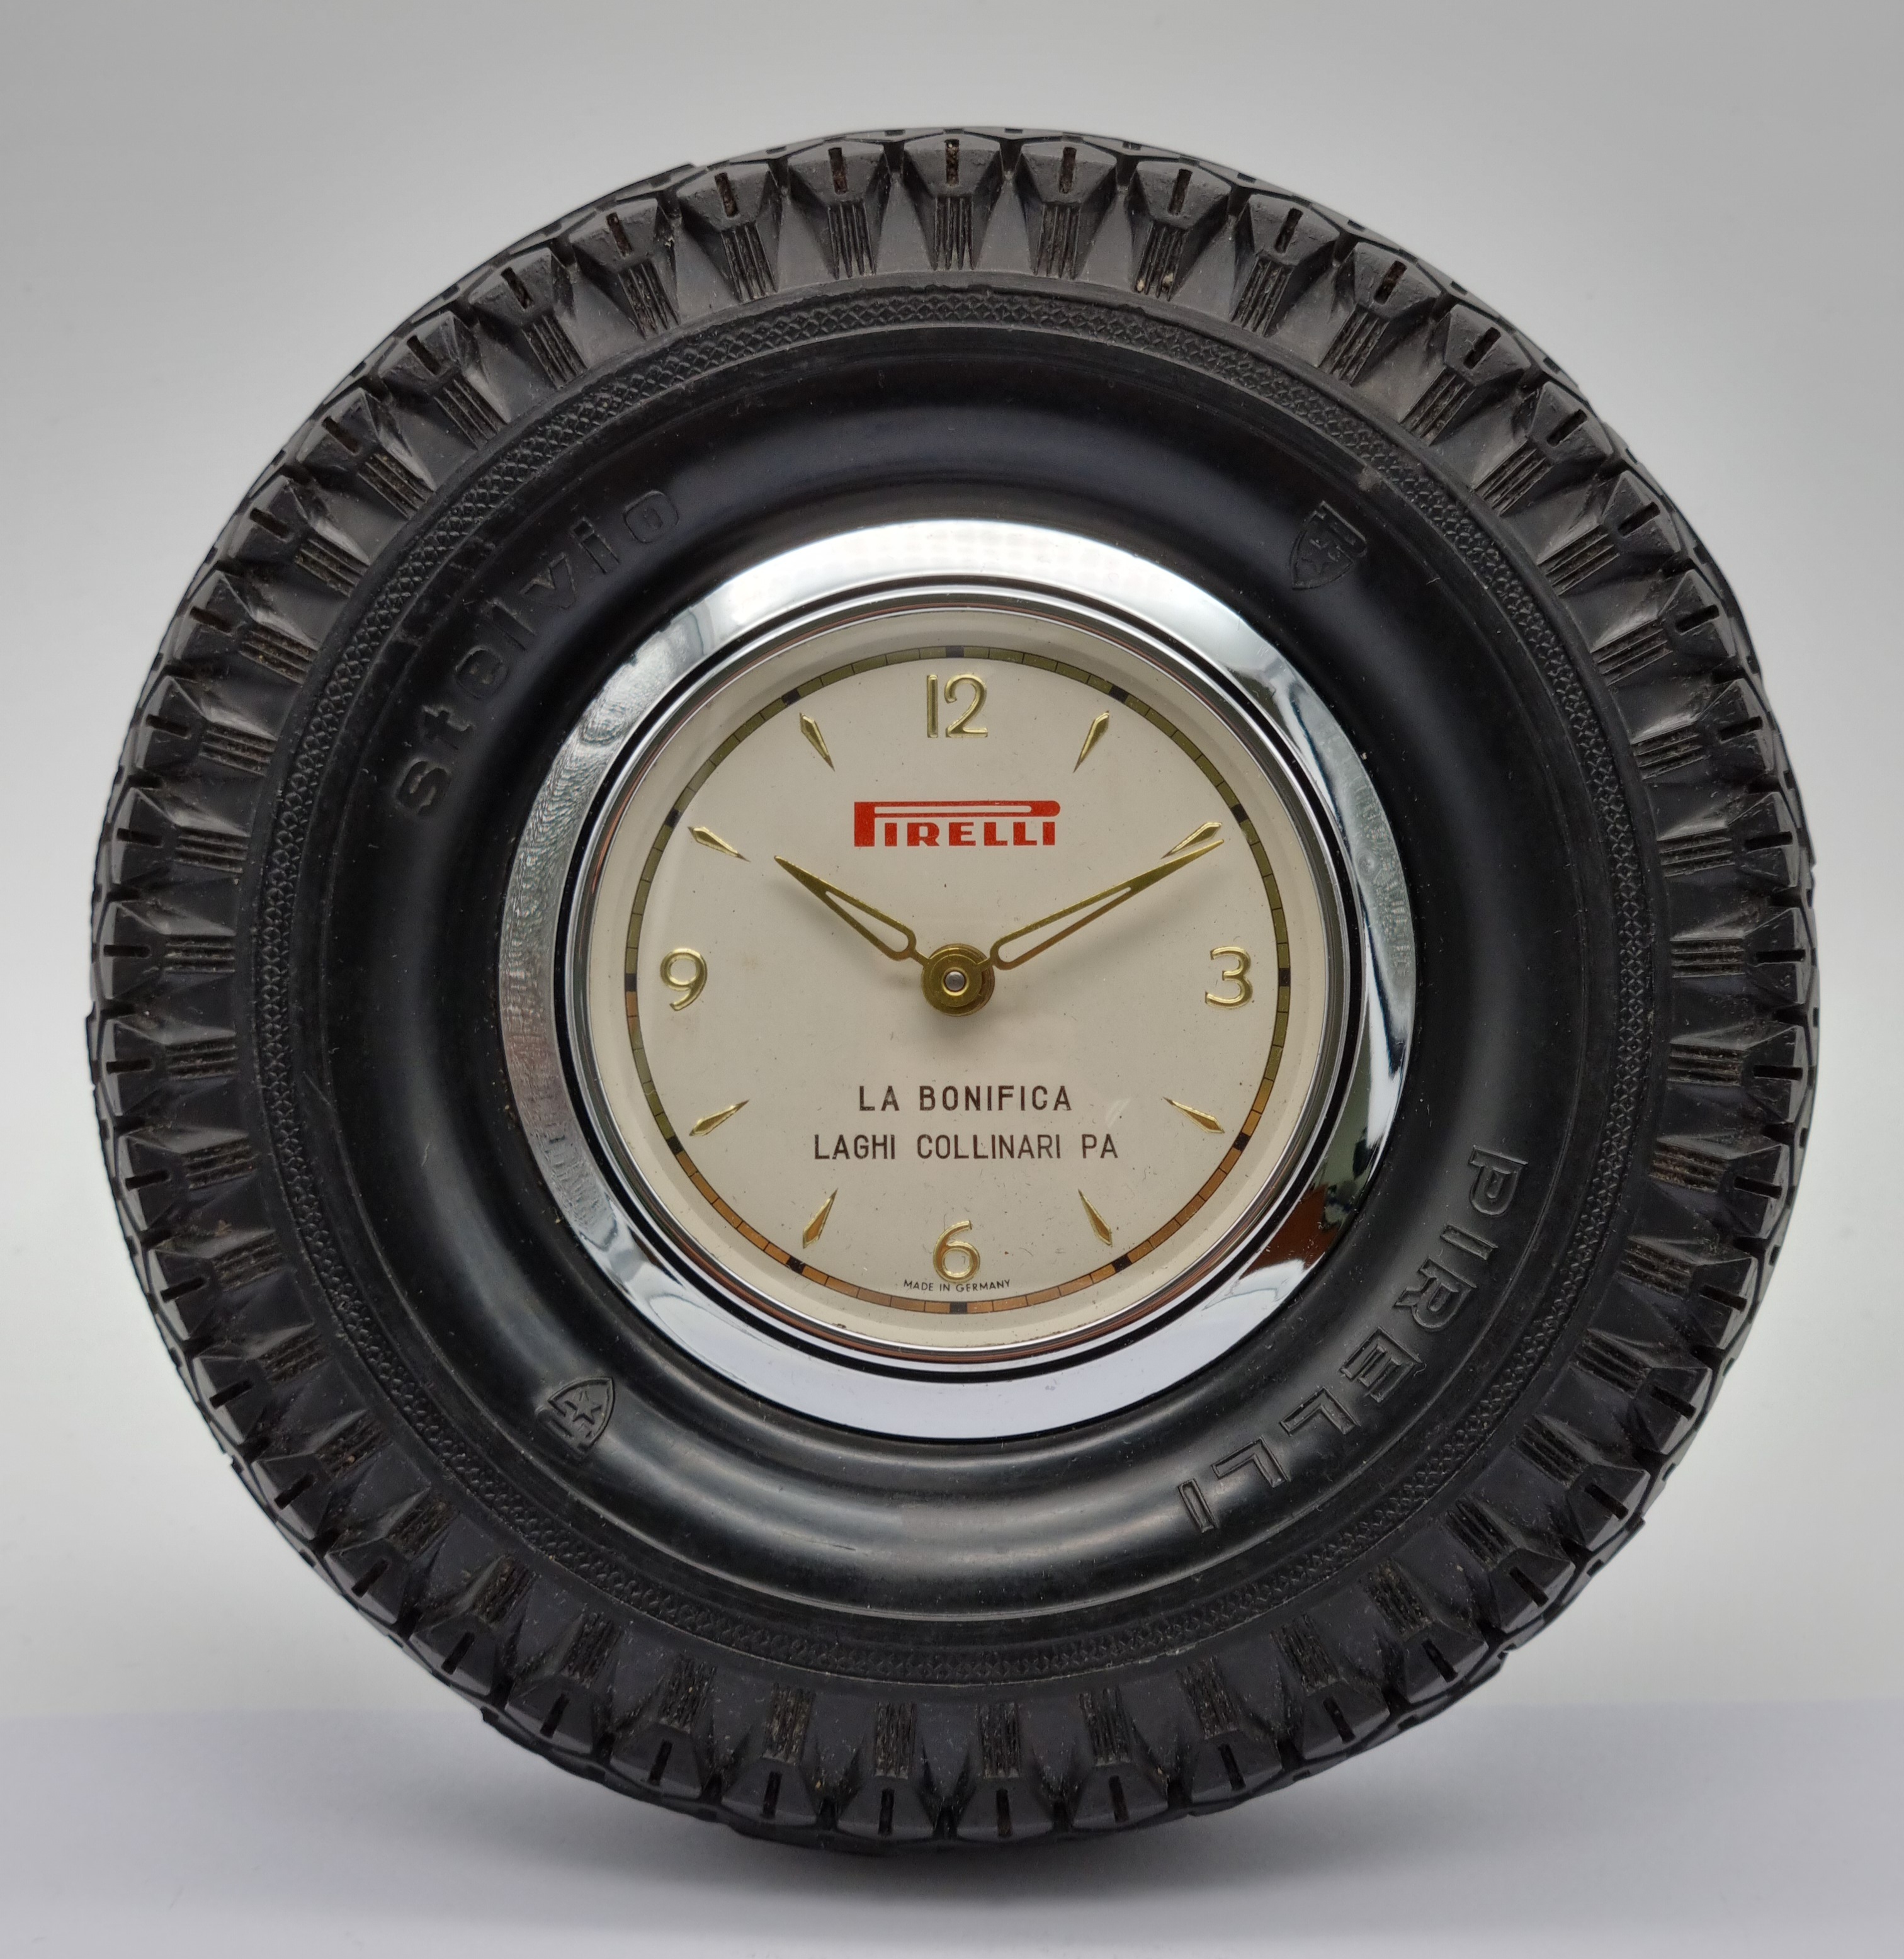 Anonimo Pirelli Italian Belted Advertising Clock from Pirelli - Stelvio - 1950s Very Good Condition | San Giorgio a Cremano